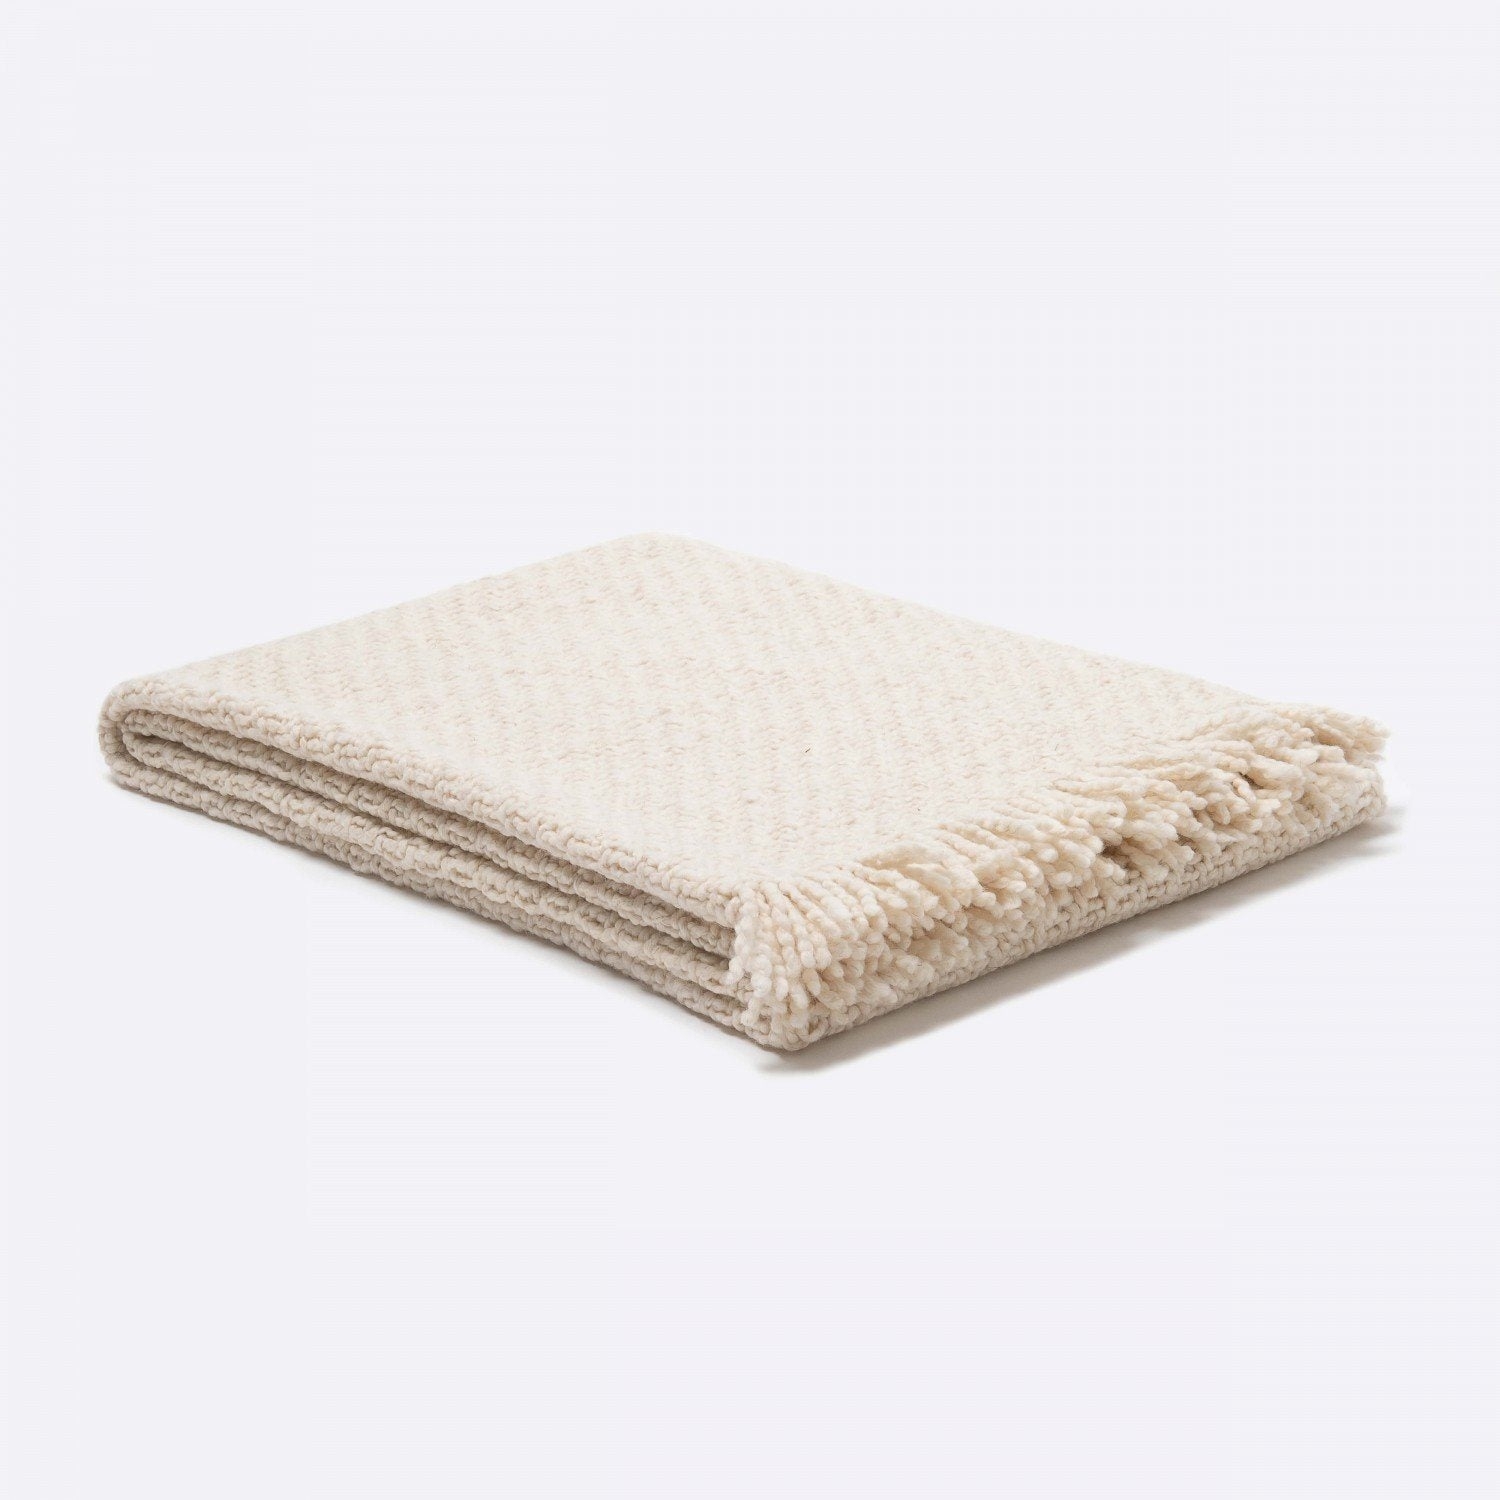 Aessai Knitwear Blanket in Cream – Aessai